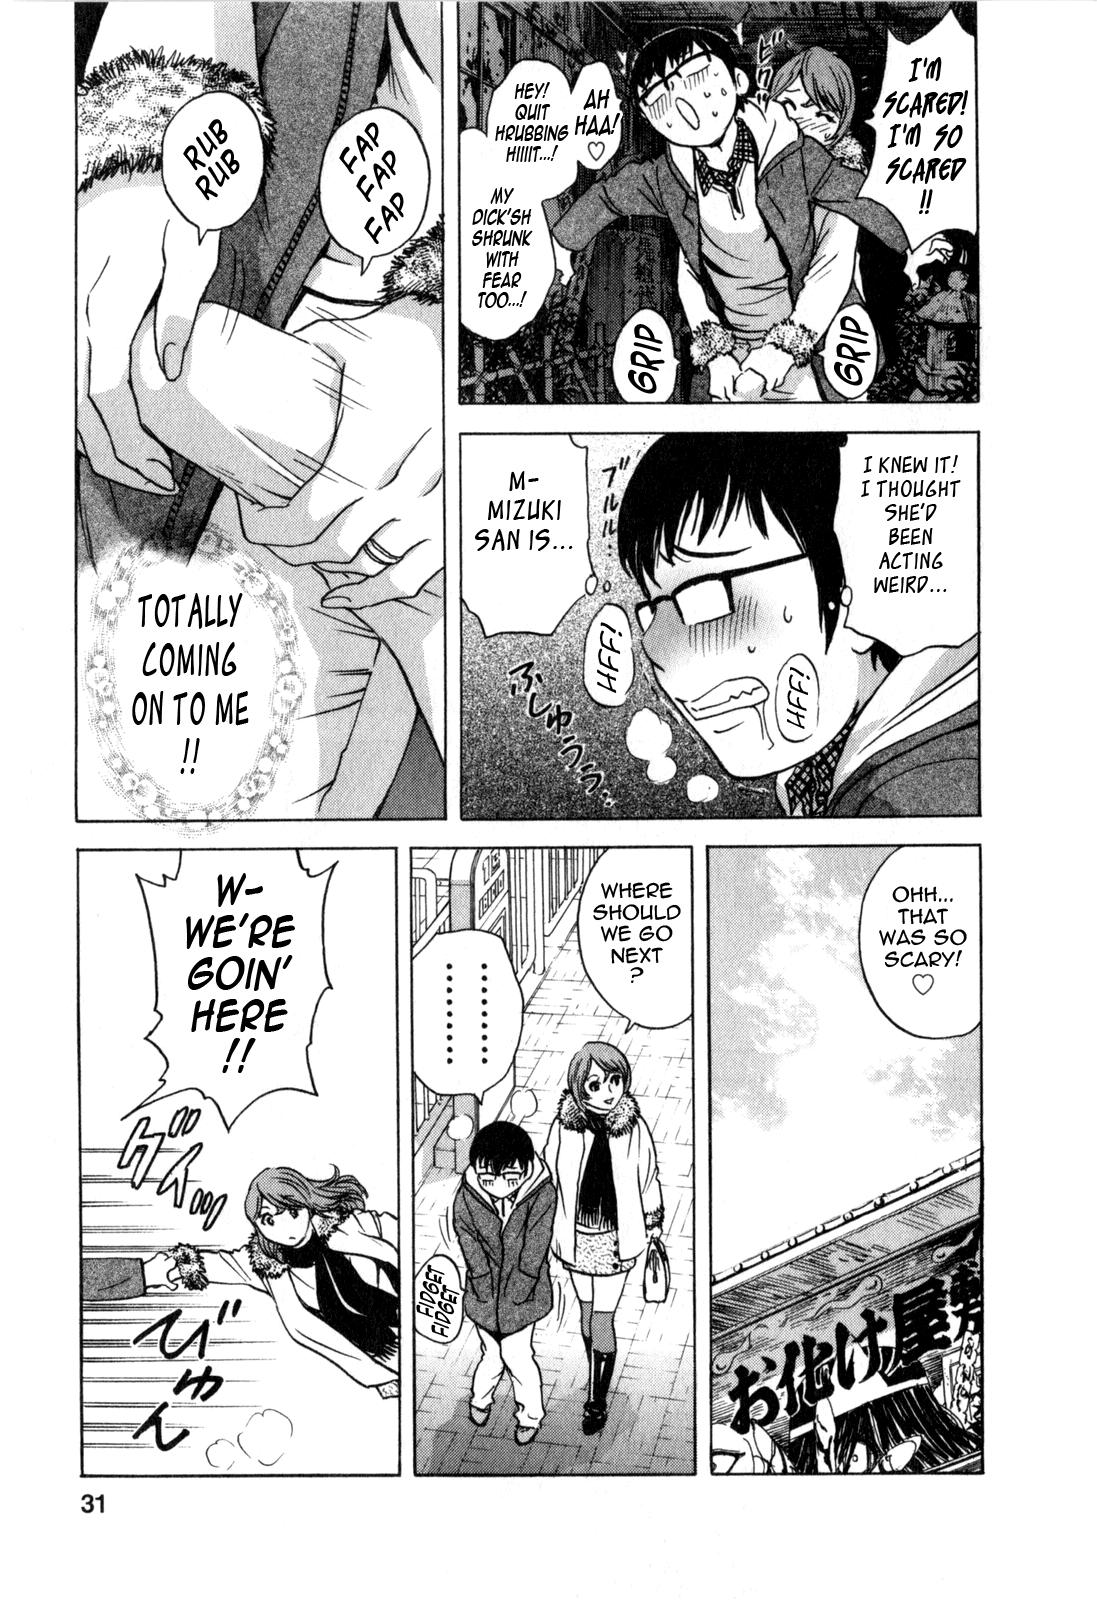 [Hidemaru] Life with Married Women Just Like a Manga 3 - Ch. 1-5 [English] {Tadanohito} 33